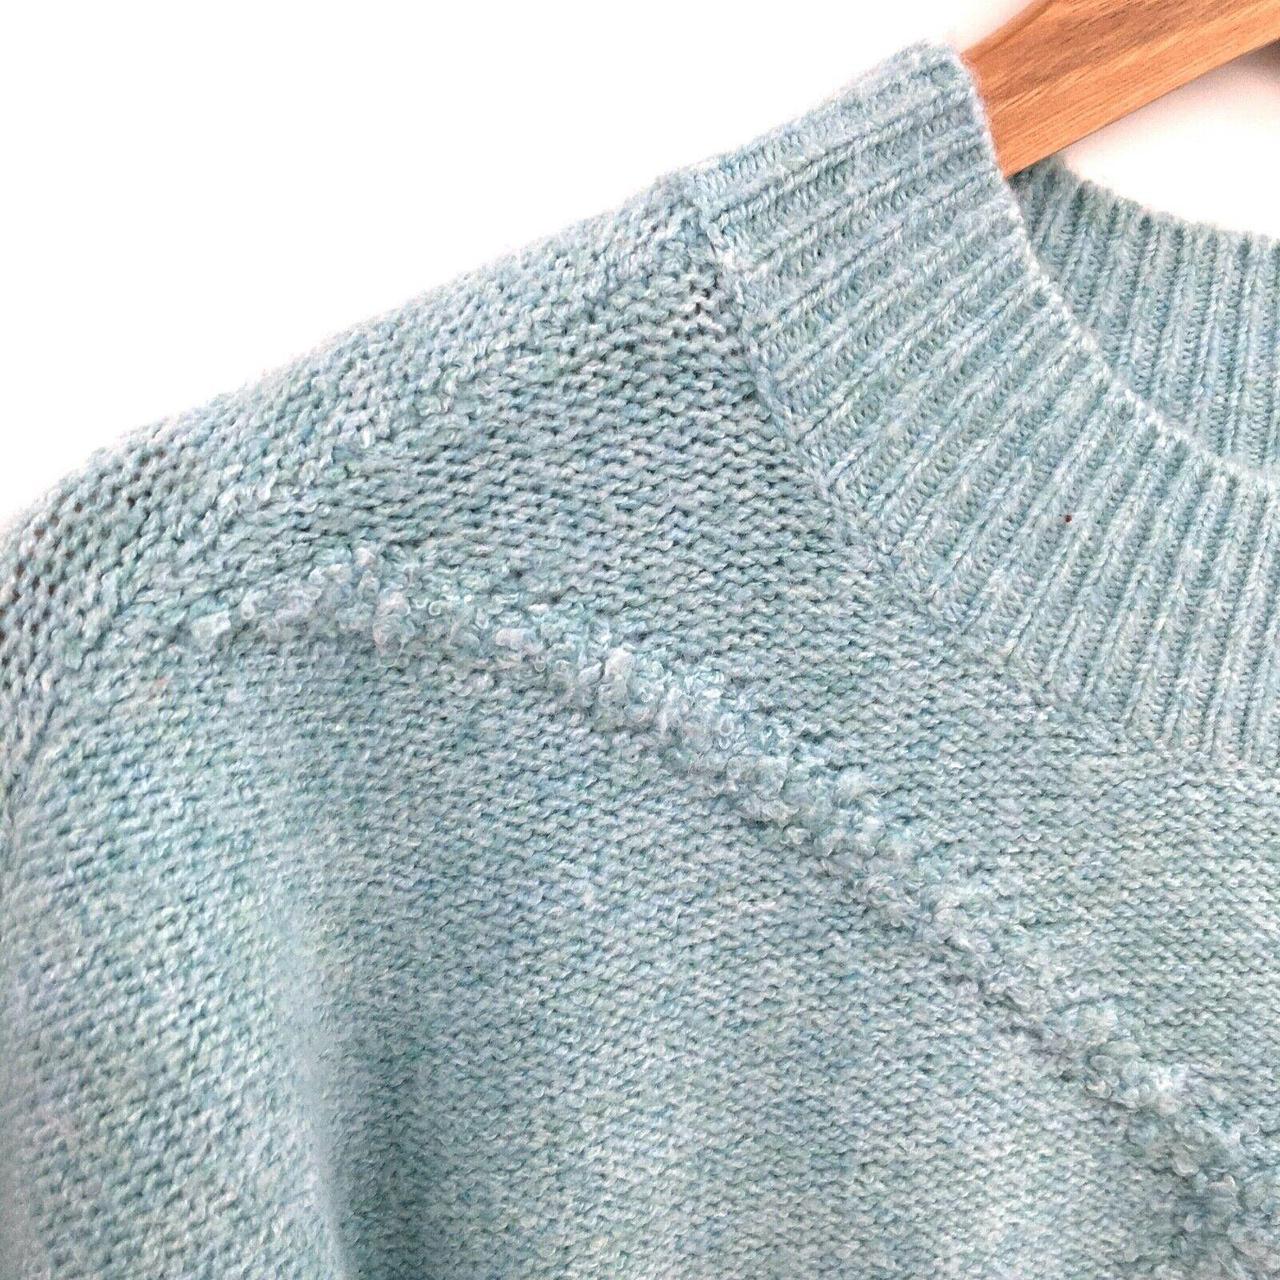 Product Image 2 - NEW Abound Knit Stitch Design